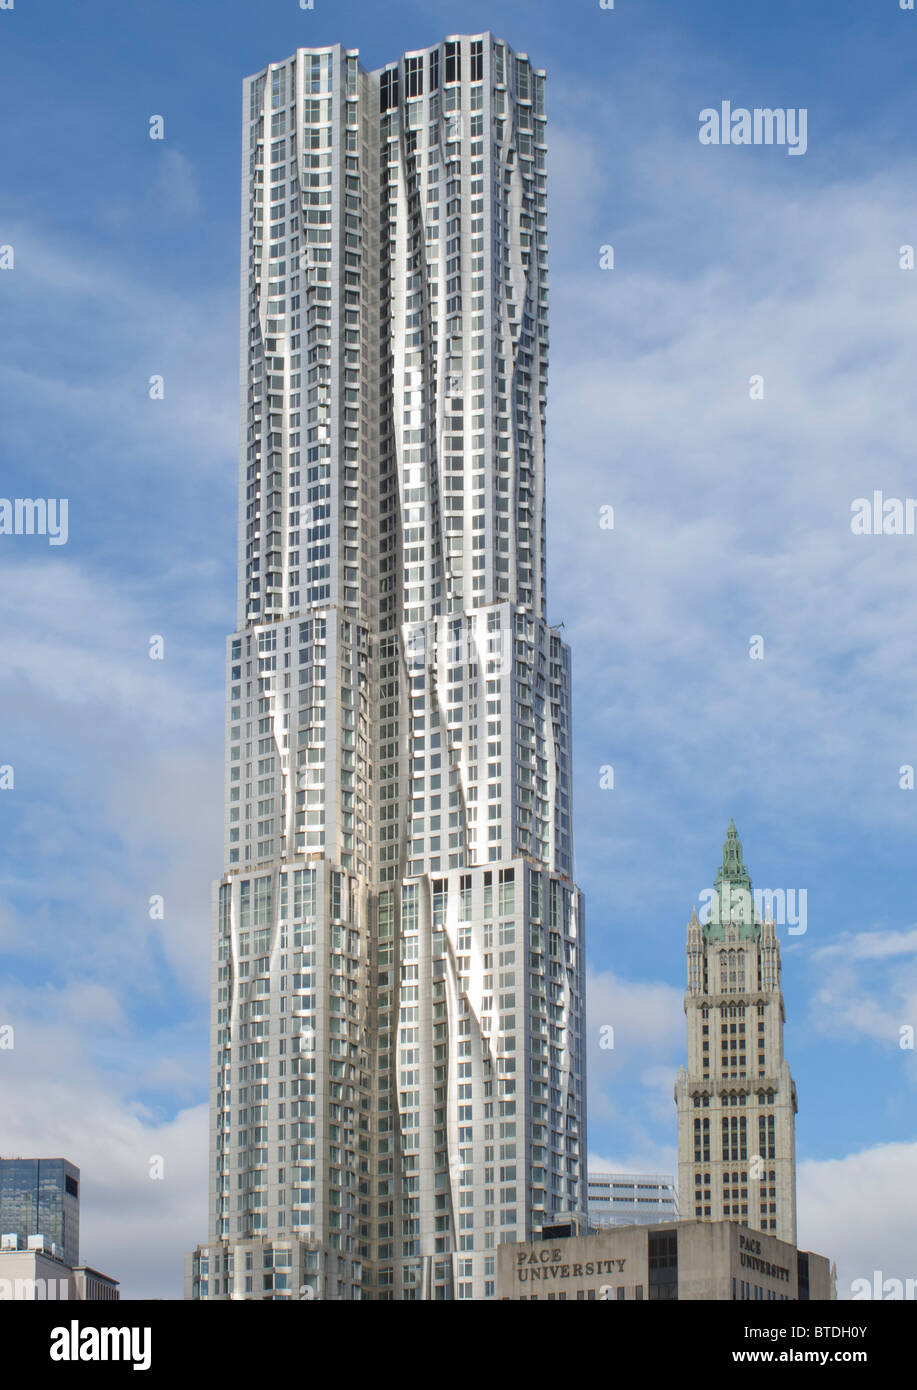 New 8 Spruce Street Beekman tower  designed by Frank Gehry on Manhattan Island New York city USA Stock Photo